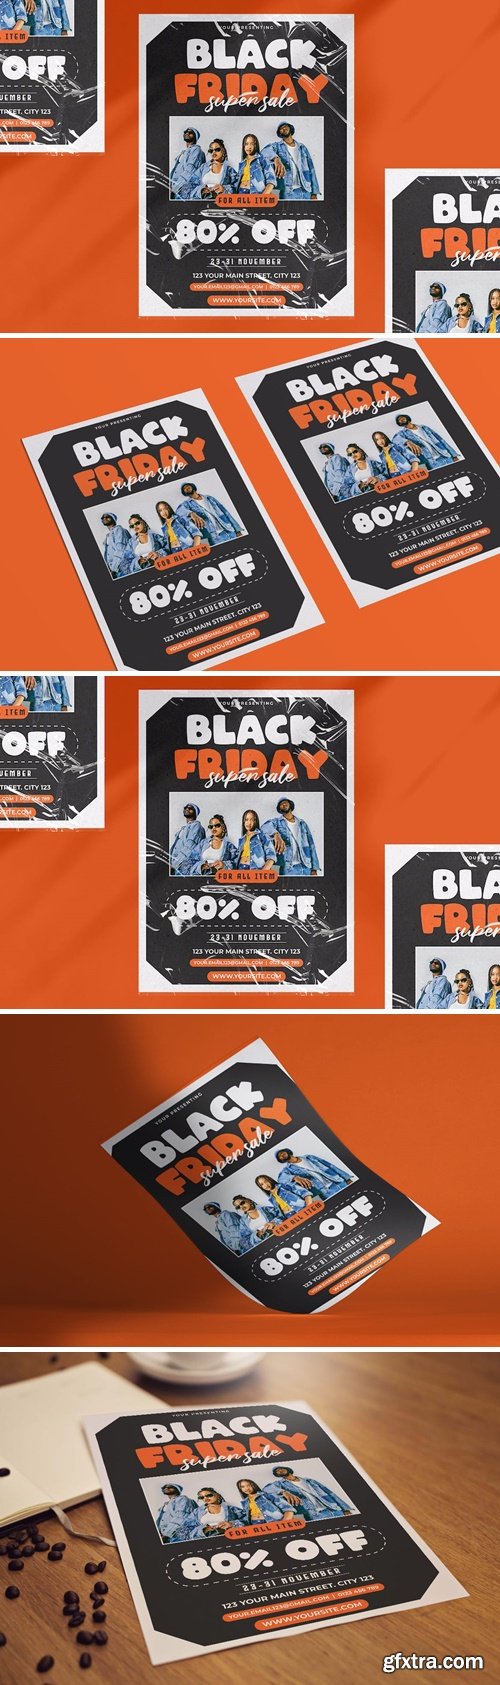 Black Friday Sale Flyer 3V3A64U